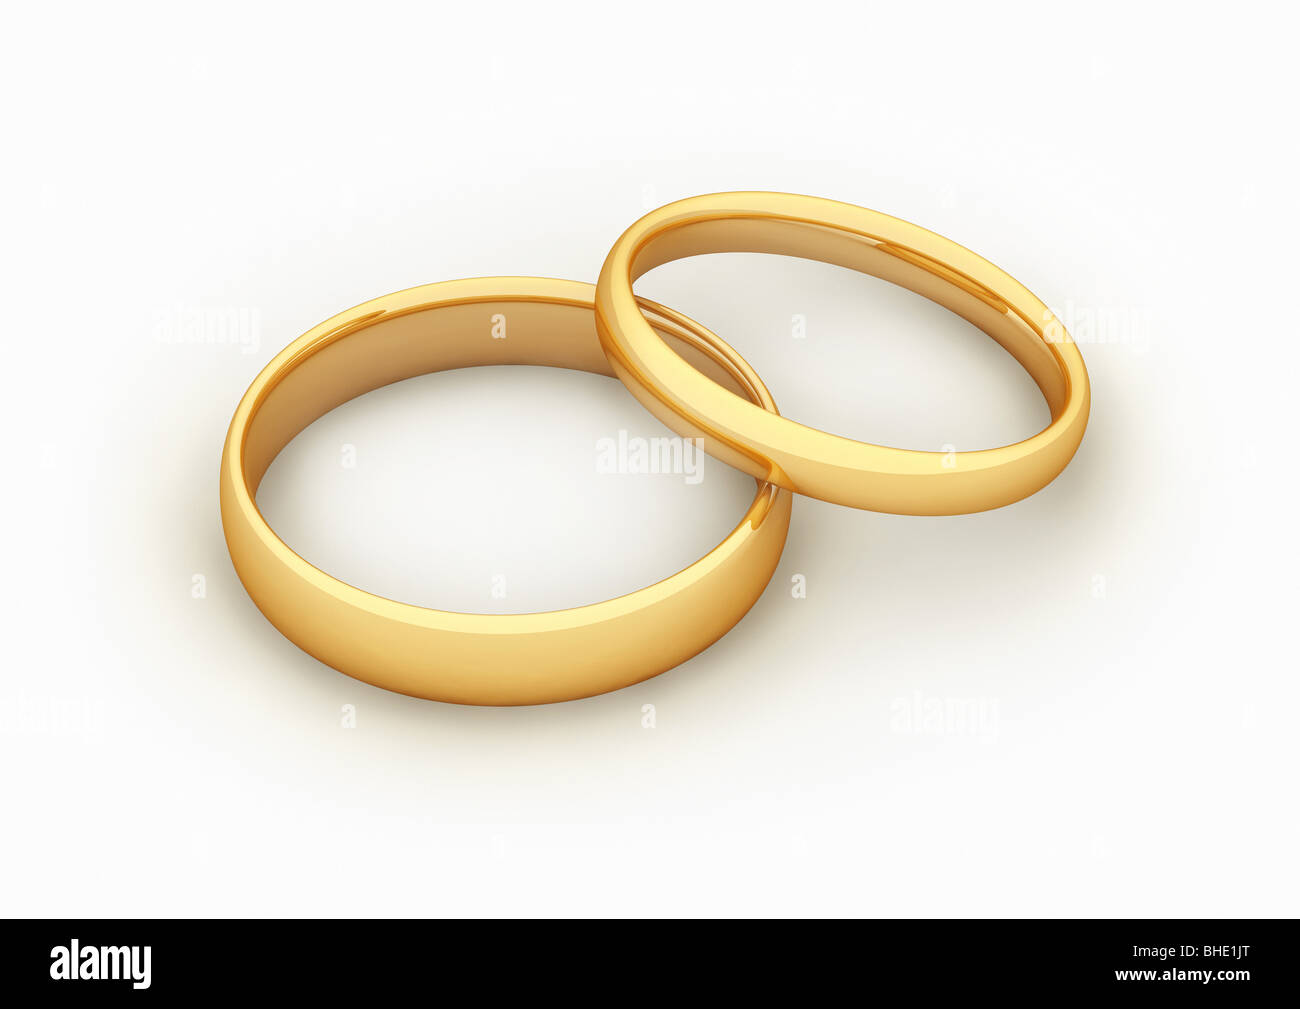 2 golden rings, symbol for marriage / fusion - 2 goldene Ringe, Symbol für  Fusion / Heirat Stock Photo - Alamy